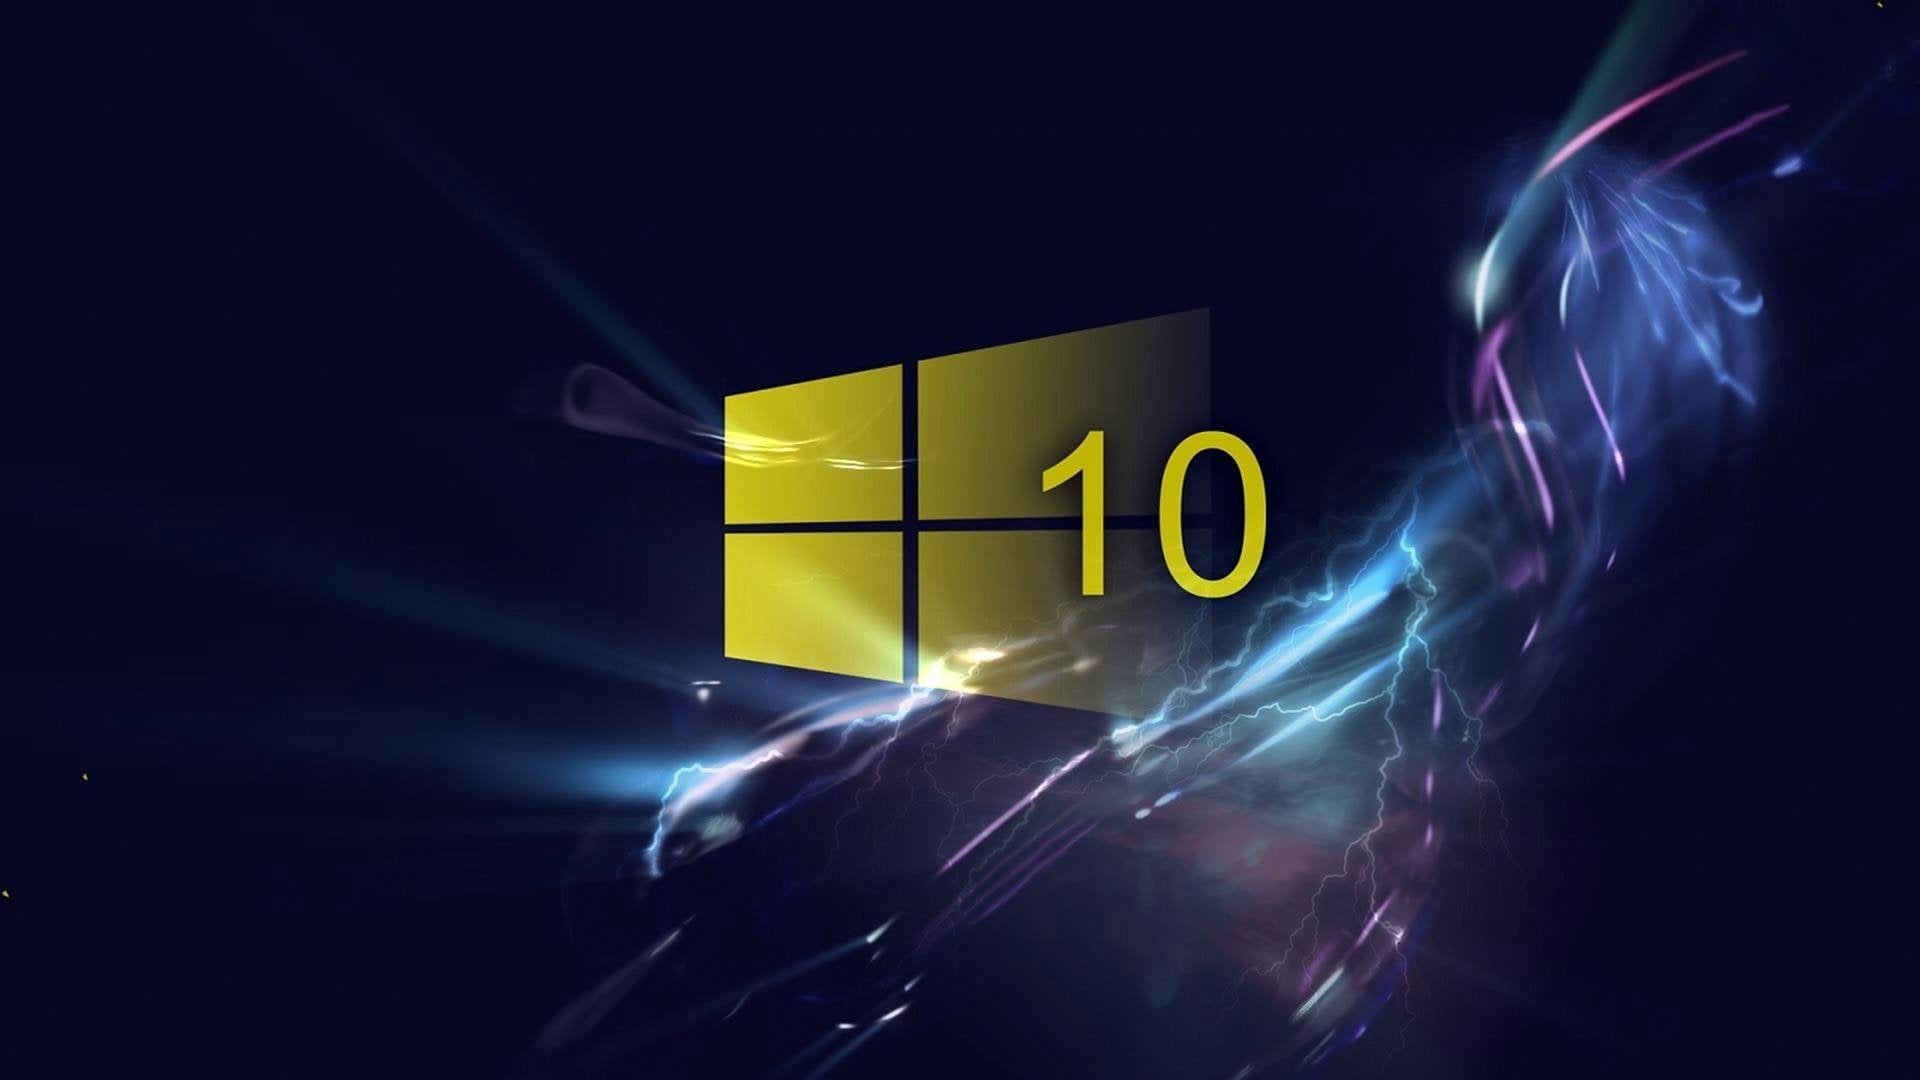 Windows 10 wallpaper, night, illuminated, motion, light - natural phenomenon